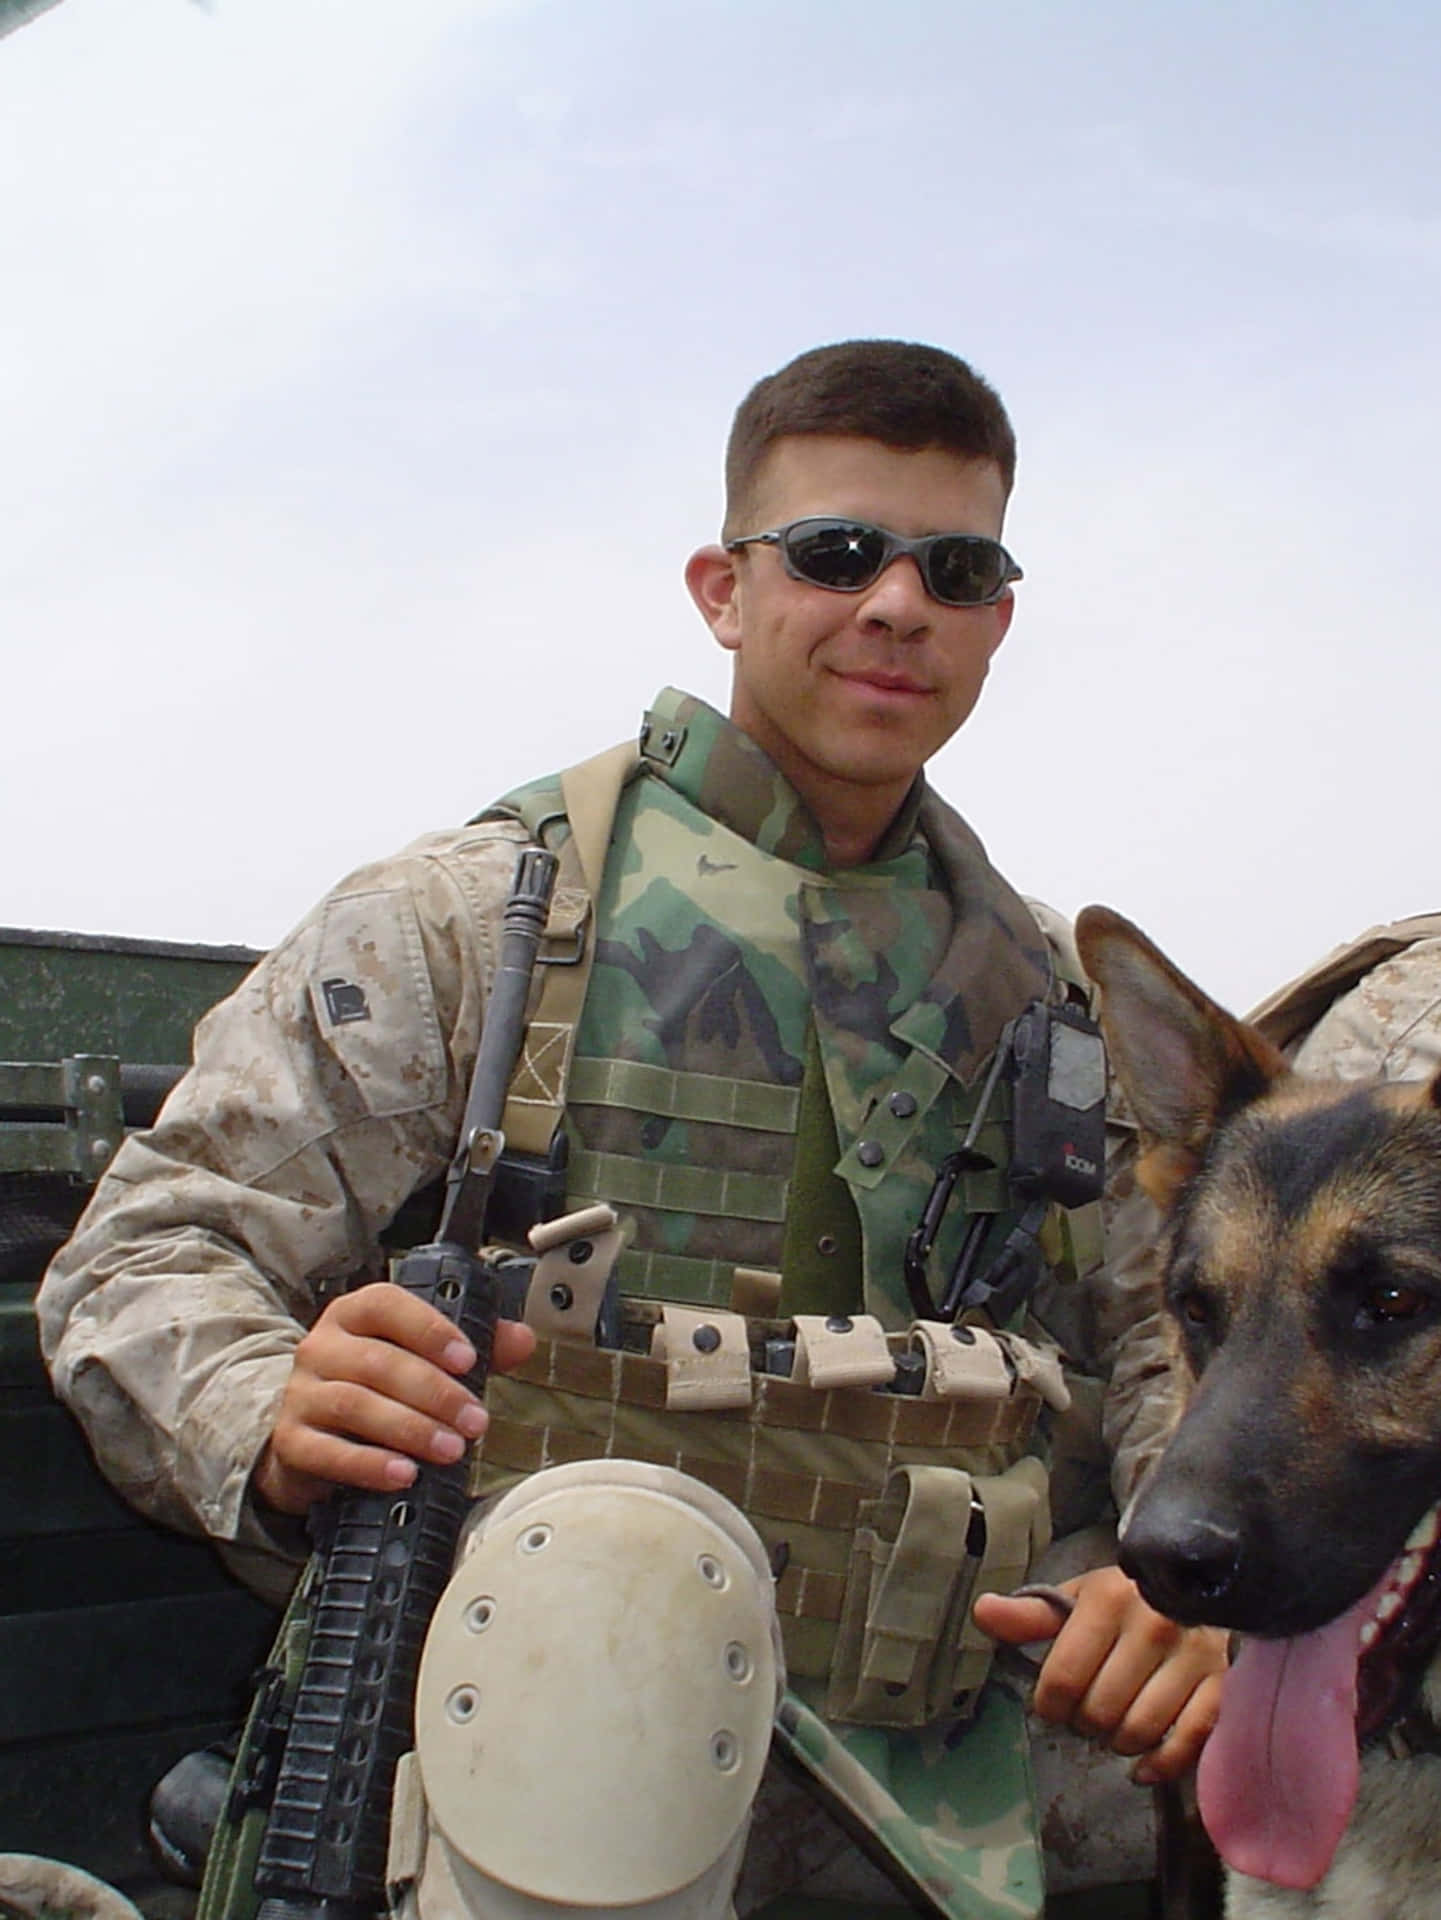 Caption: Military Dog On Duty Wallpaper